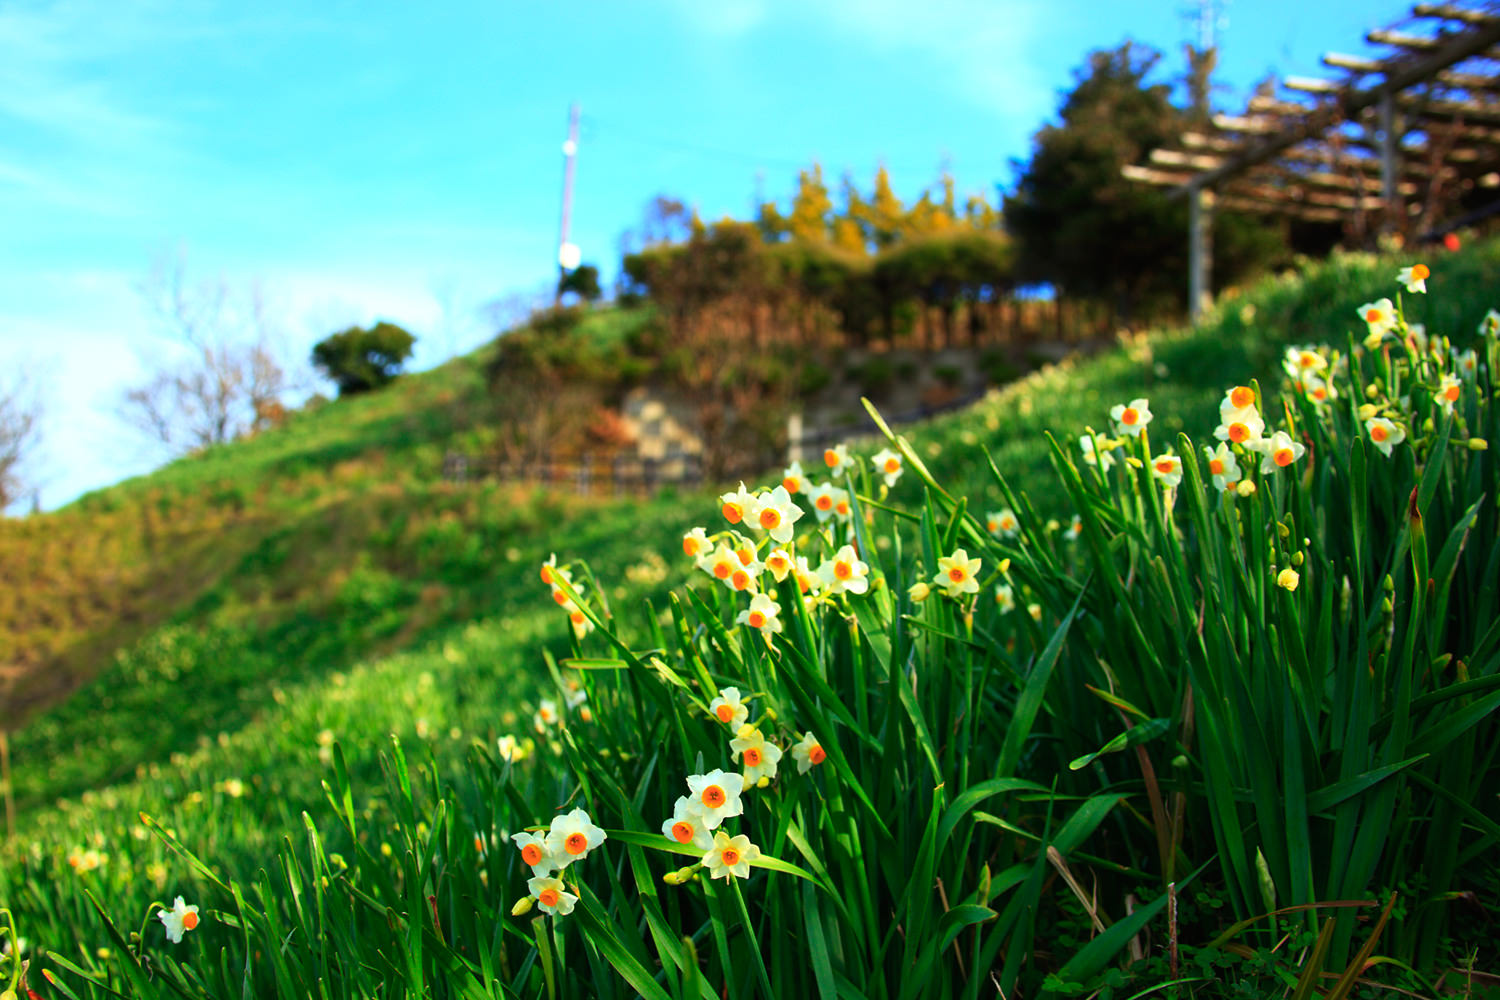 Echizen Daffodil Park